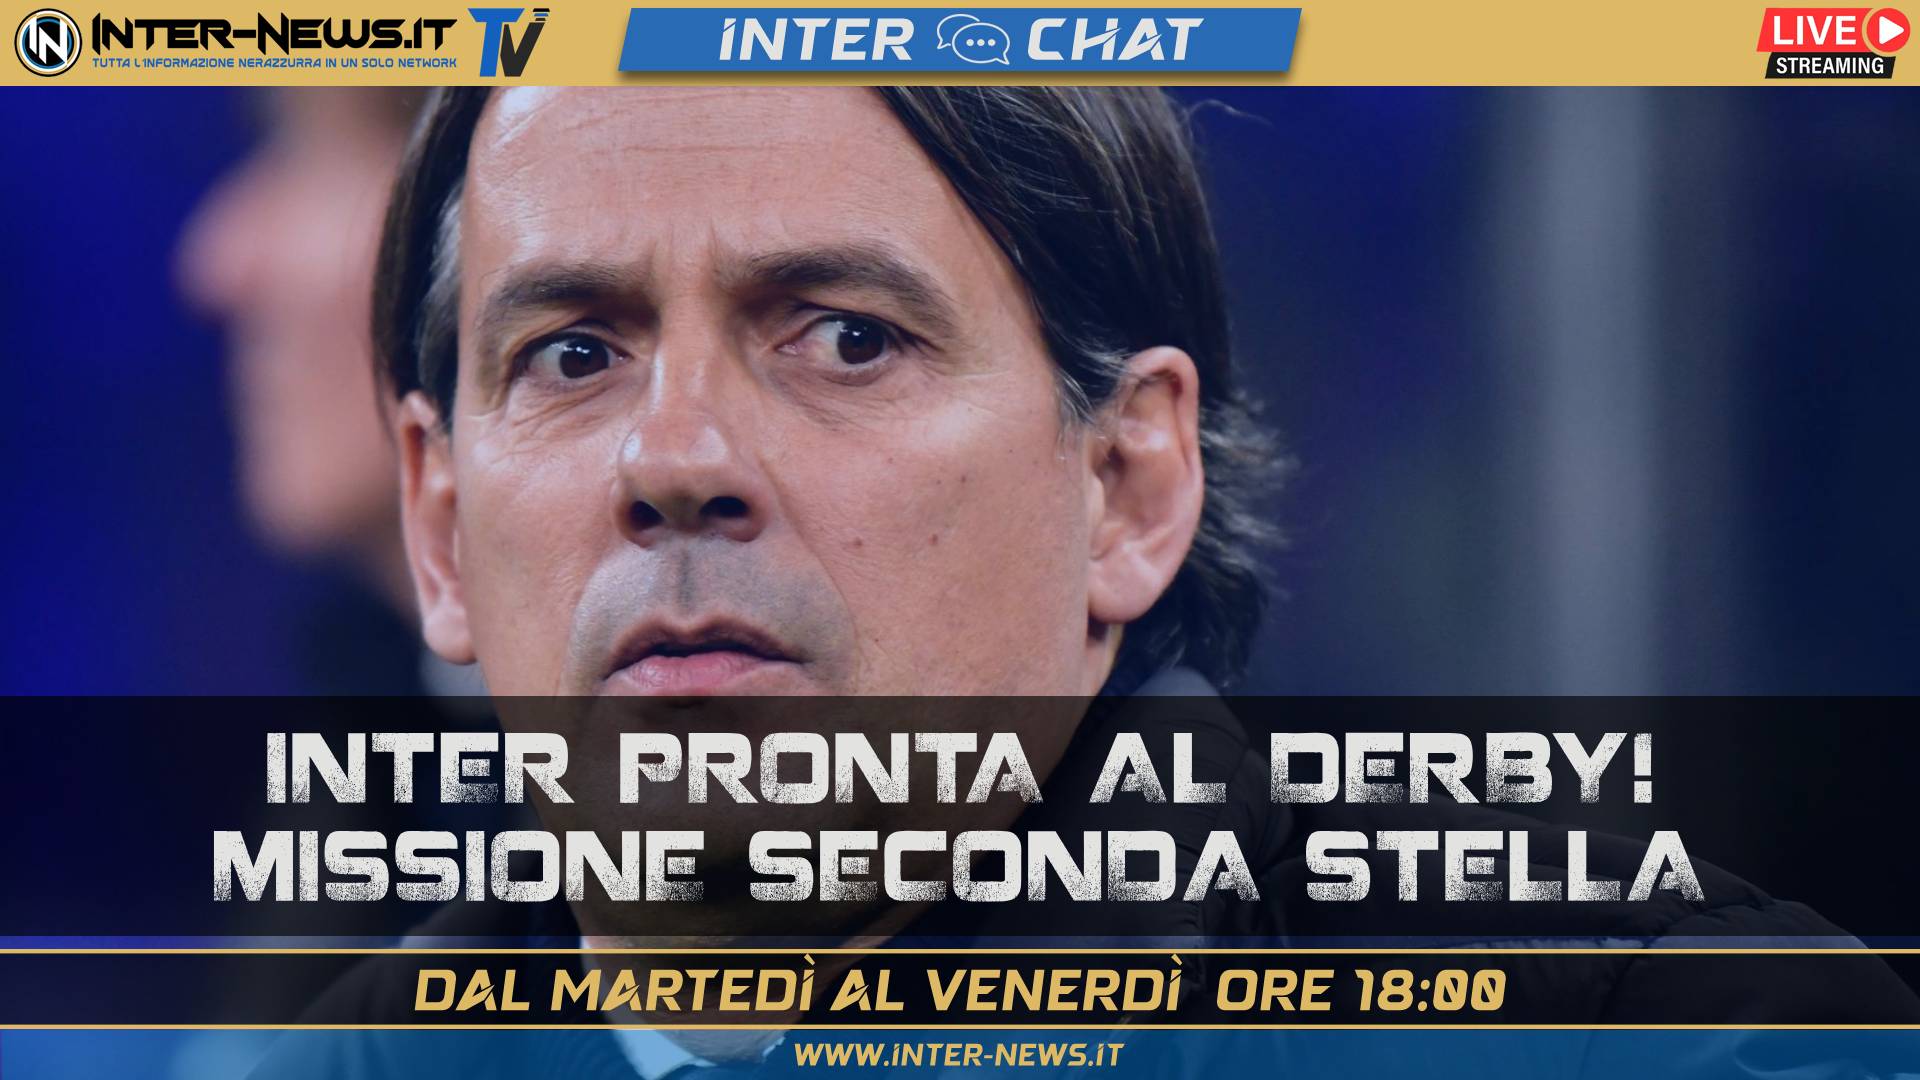 Inter pronta